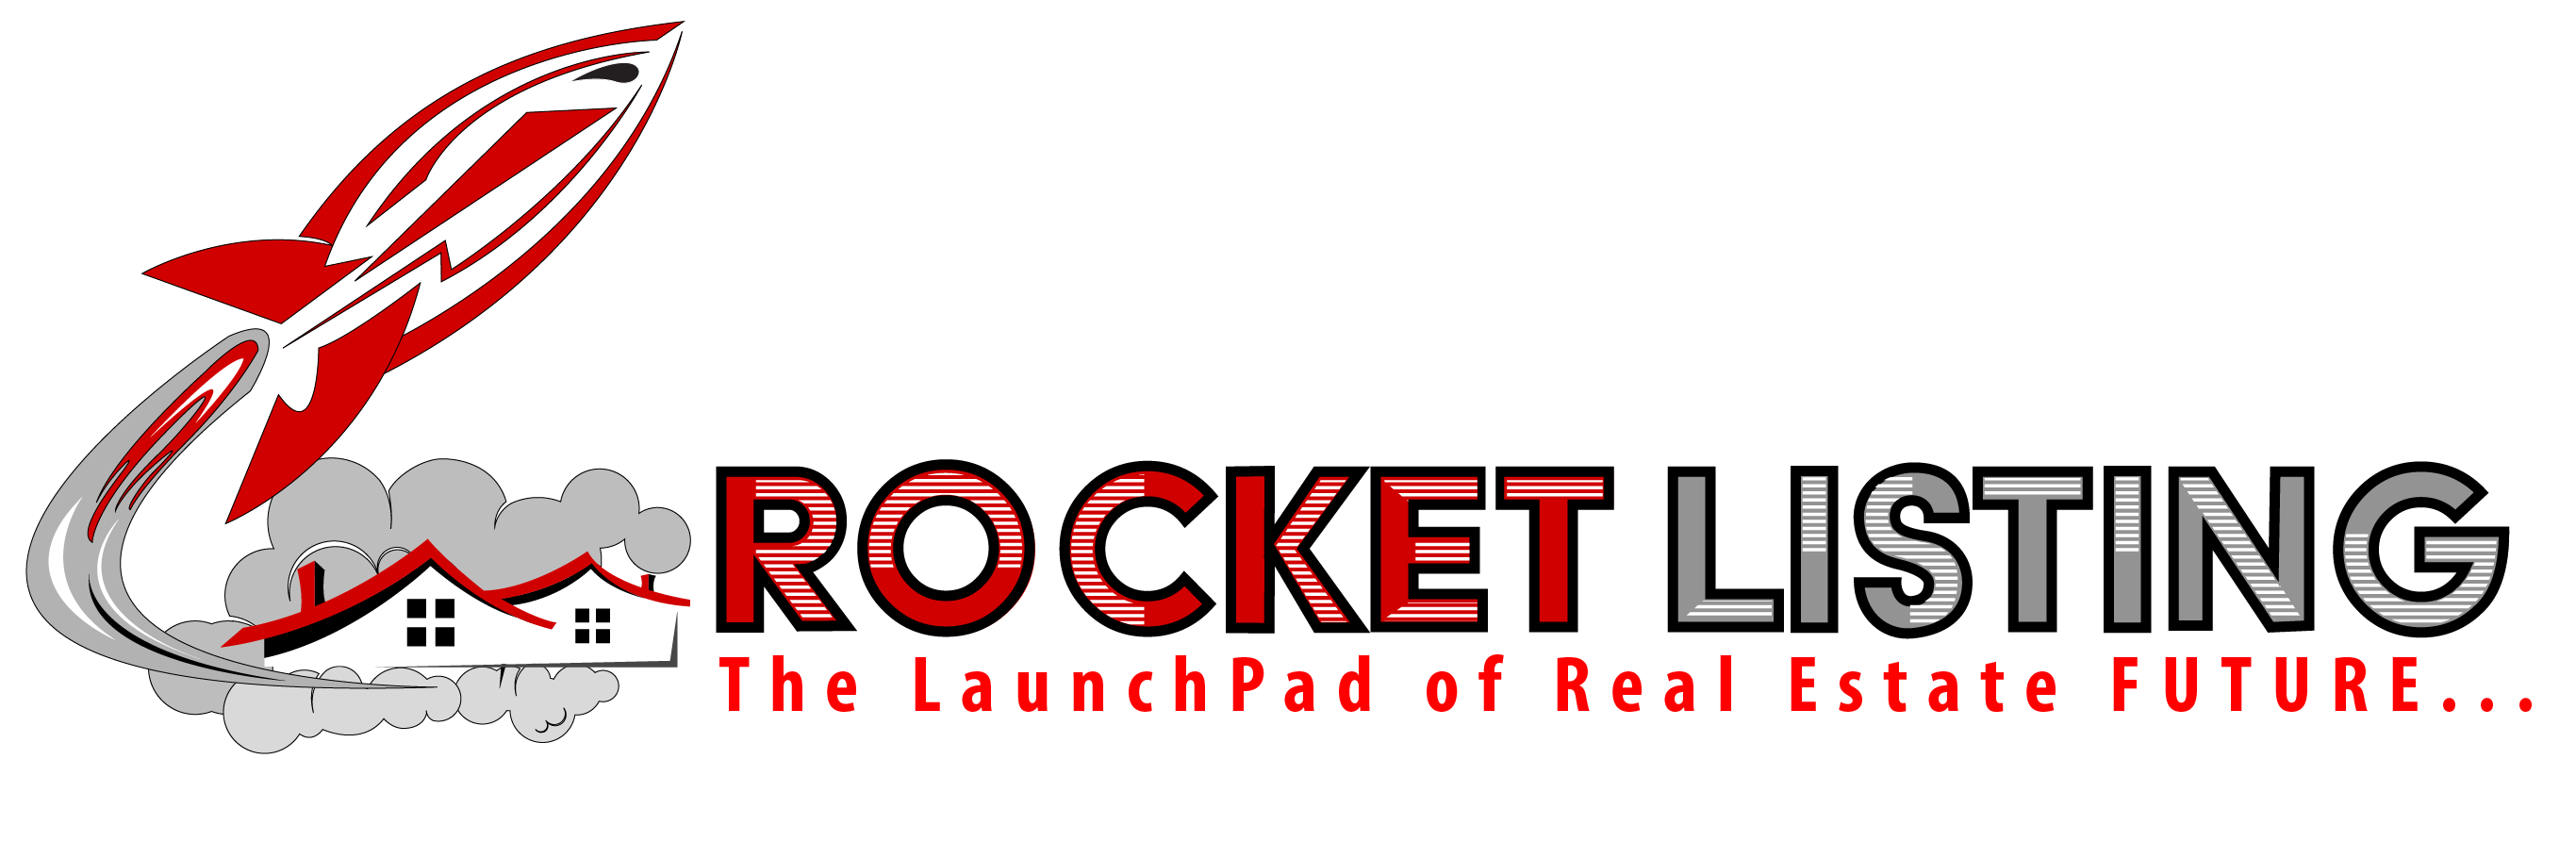 The Launch Pad of Real Estate Future | RocketListing.com